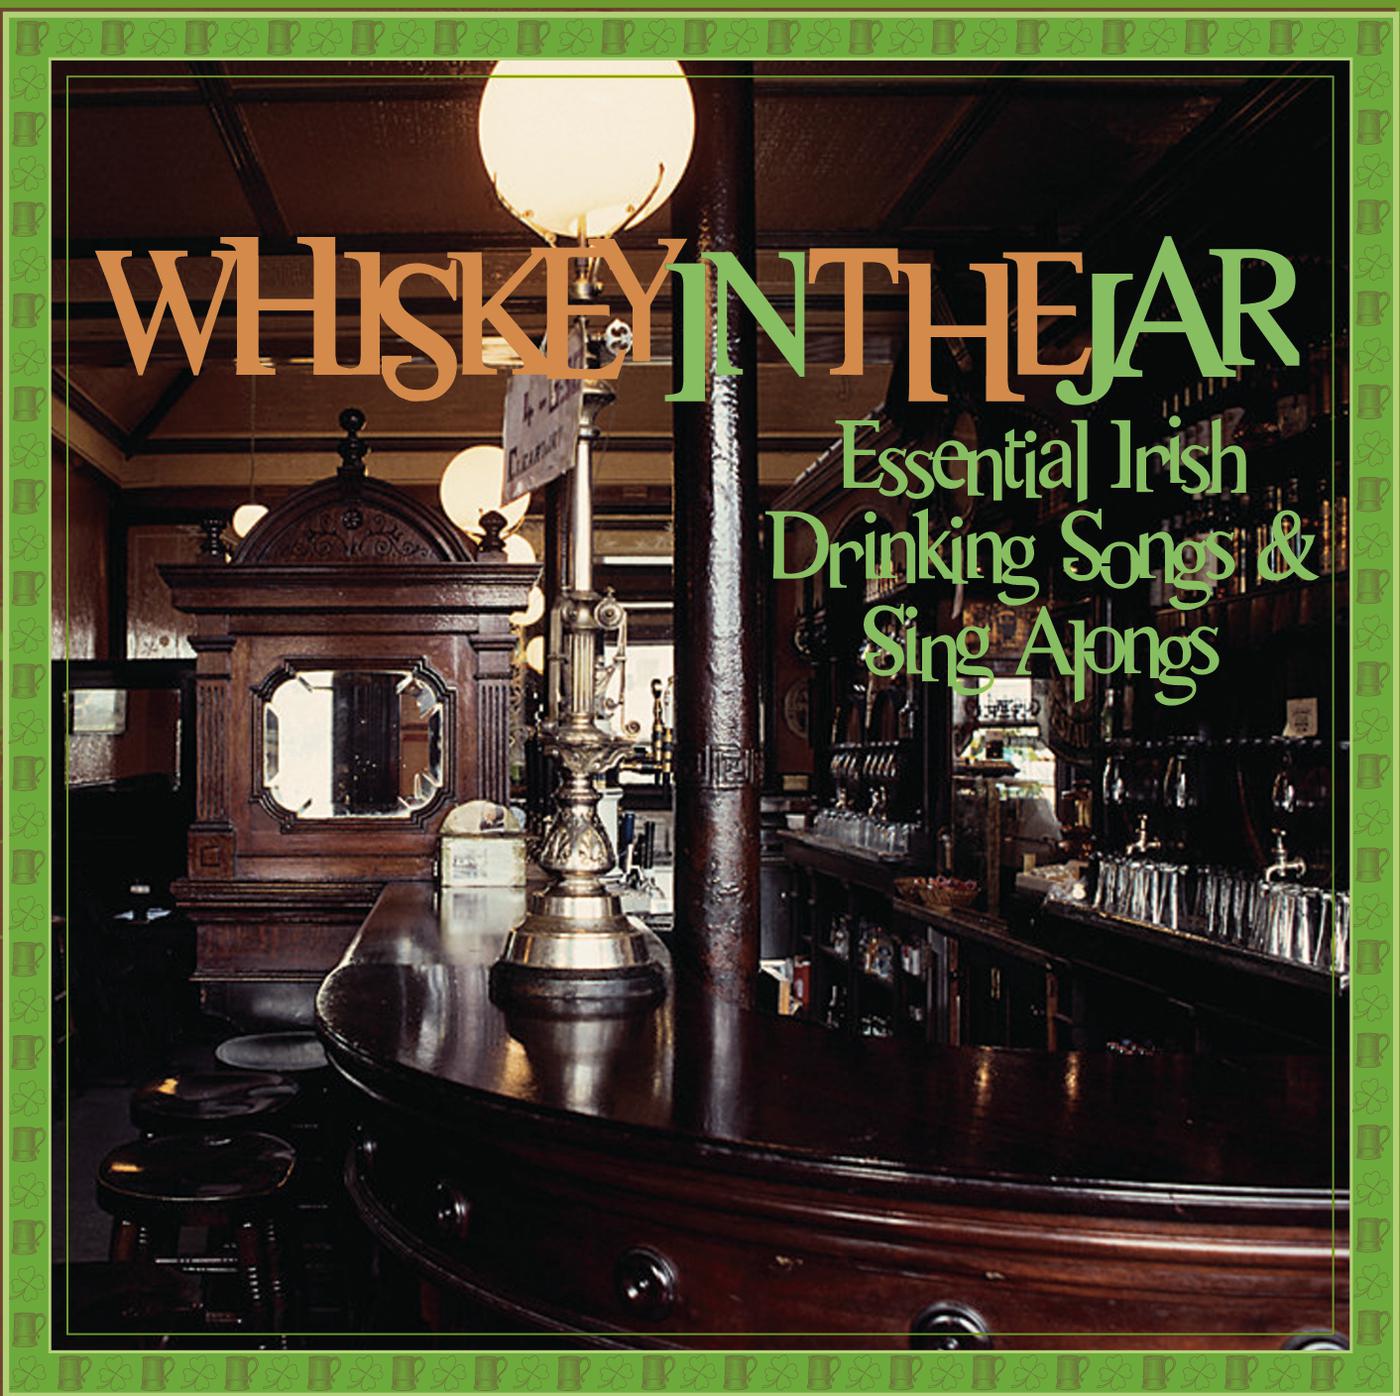 Irish drunk song. Irish drinking Songs. Irish Rover виски. Виски brothers Band. Whiskey in the Jar.